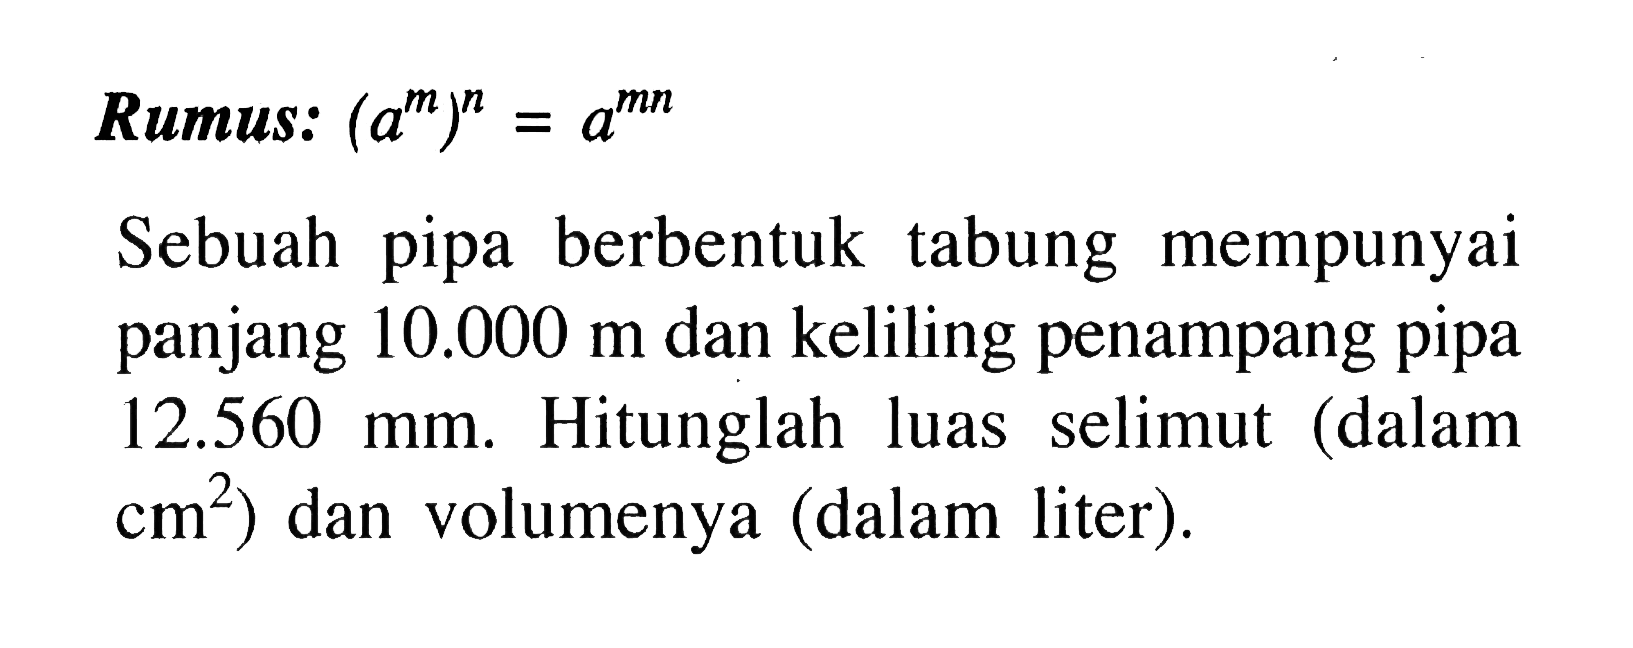 Rumus: (a^m)^n=a^(mn) Sebuah pipa berbentuk tabung mempunyai panjang 10.000 m dan keliling penampang pipa 12.560 mm. Hitunglah luas selimut (dalam cm^2) dan volumenya (dalam liter).